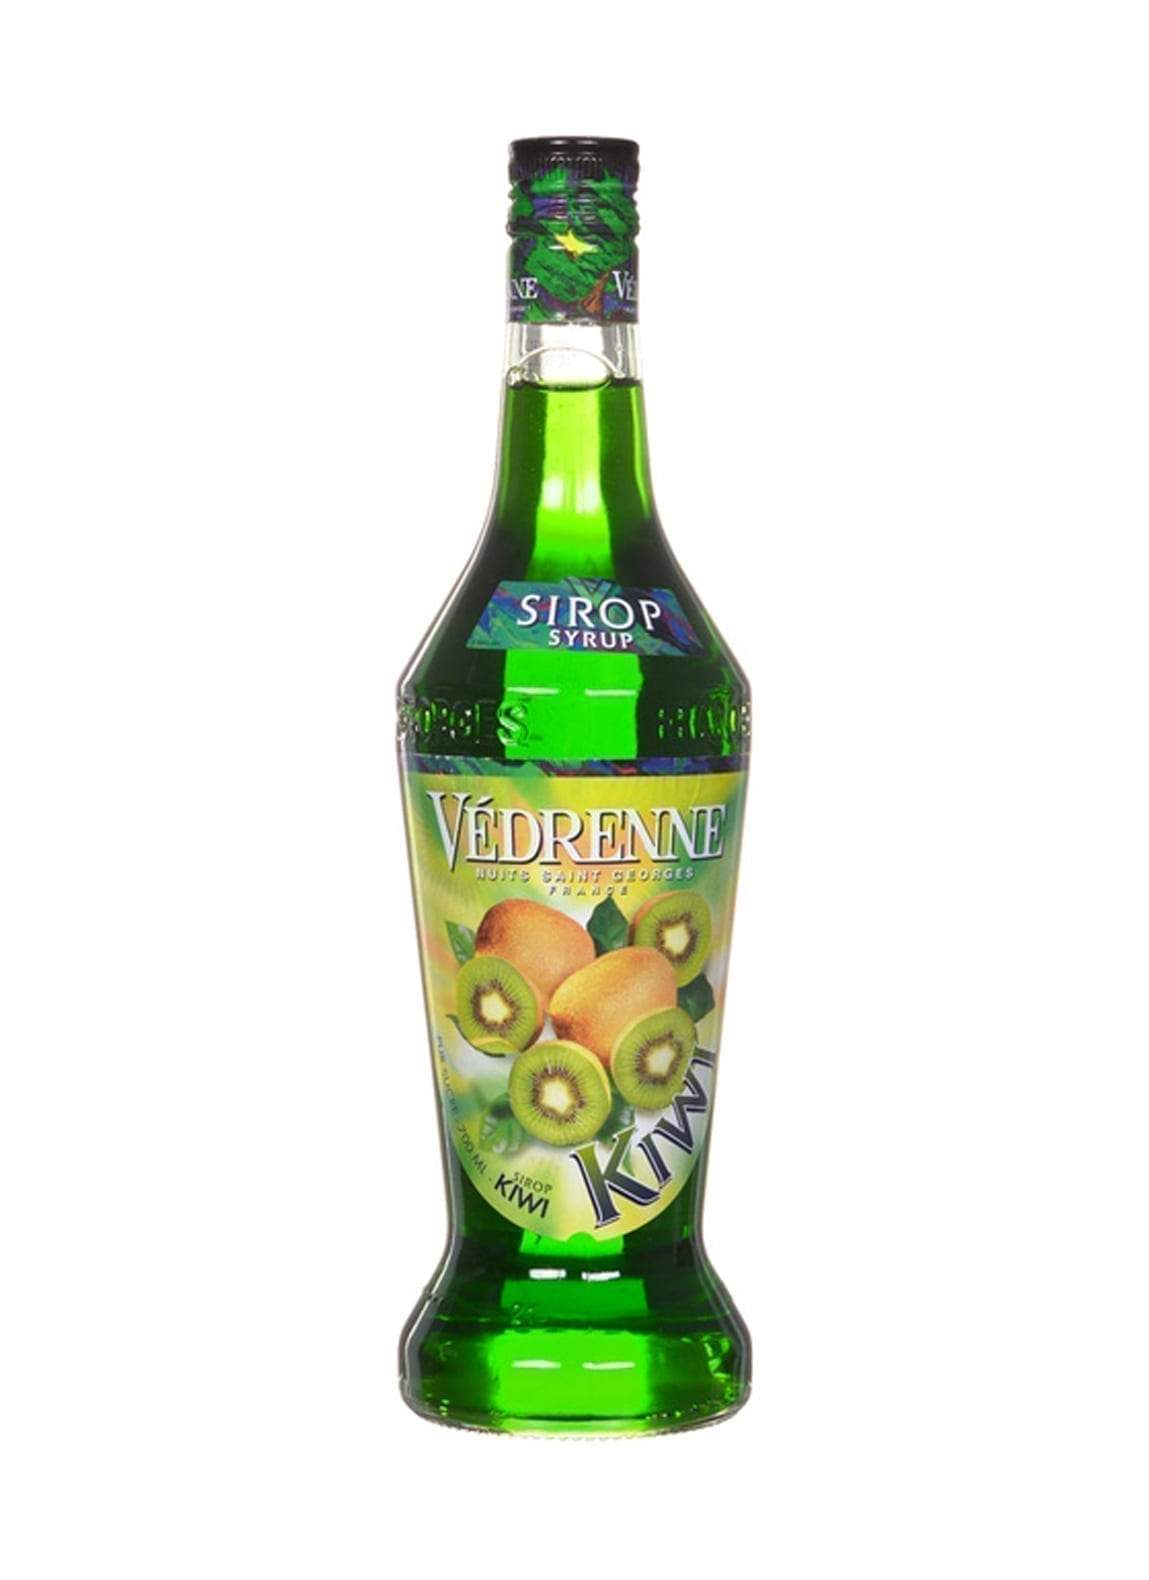 Vedrenne Sirop Kiwi (Kiwifruit cordial) 700ml | Syrup | Shop online at Spirits of France